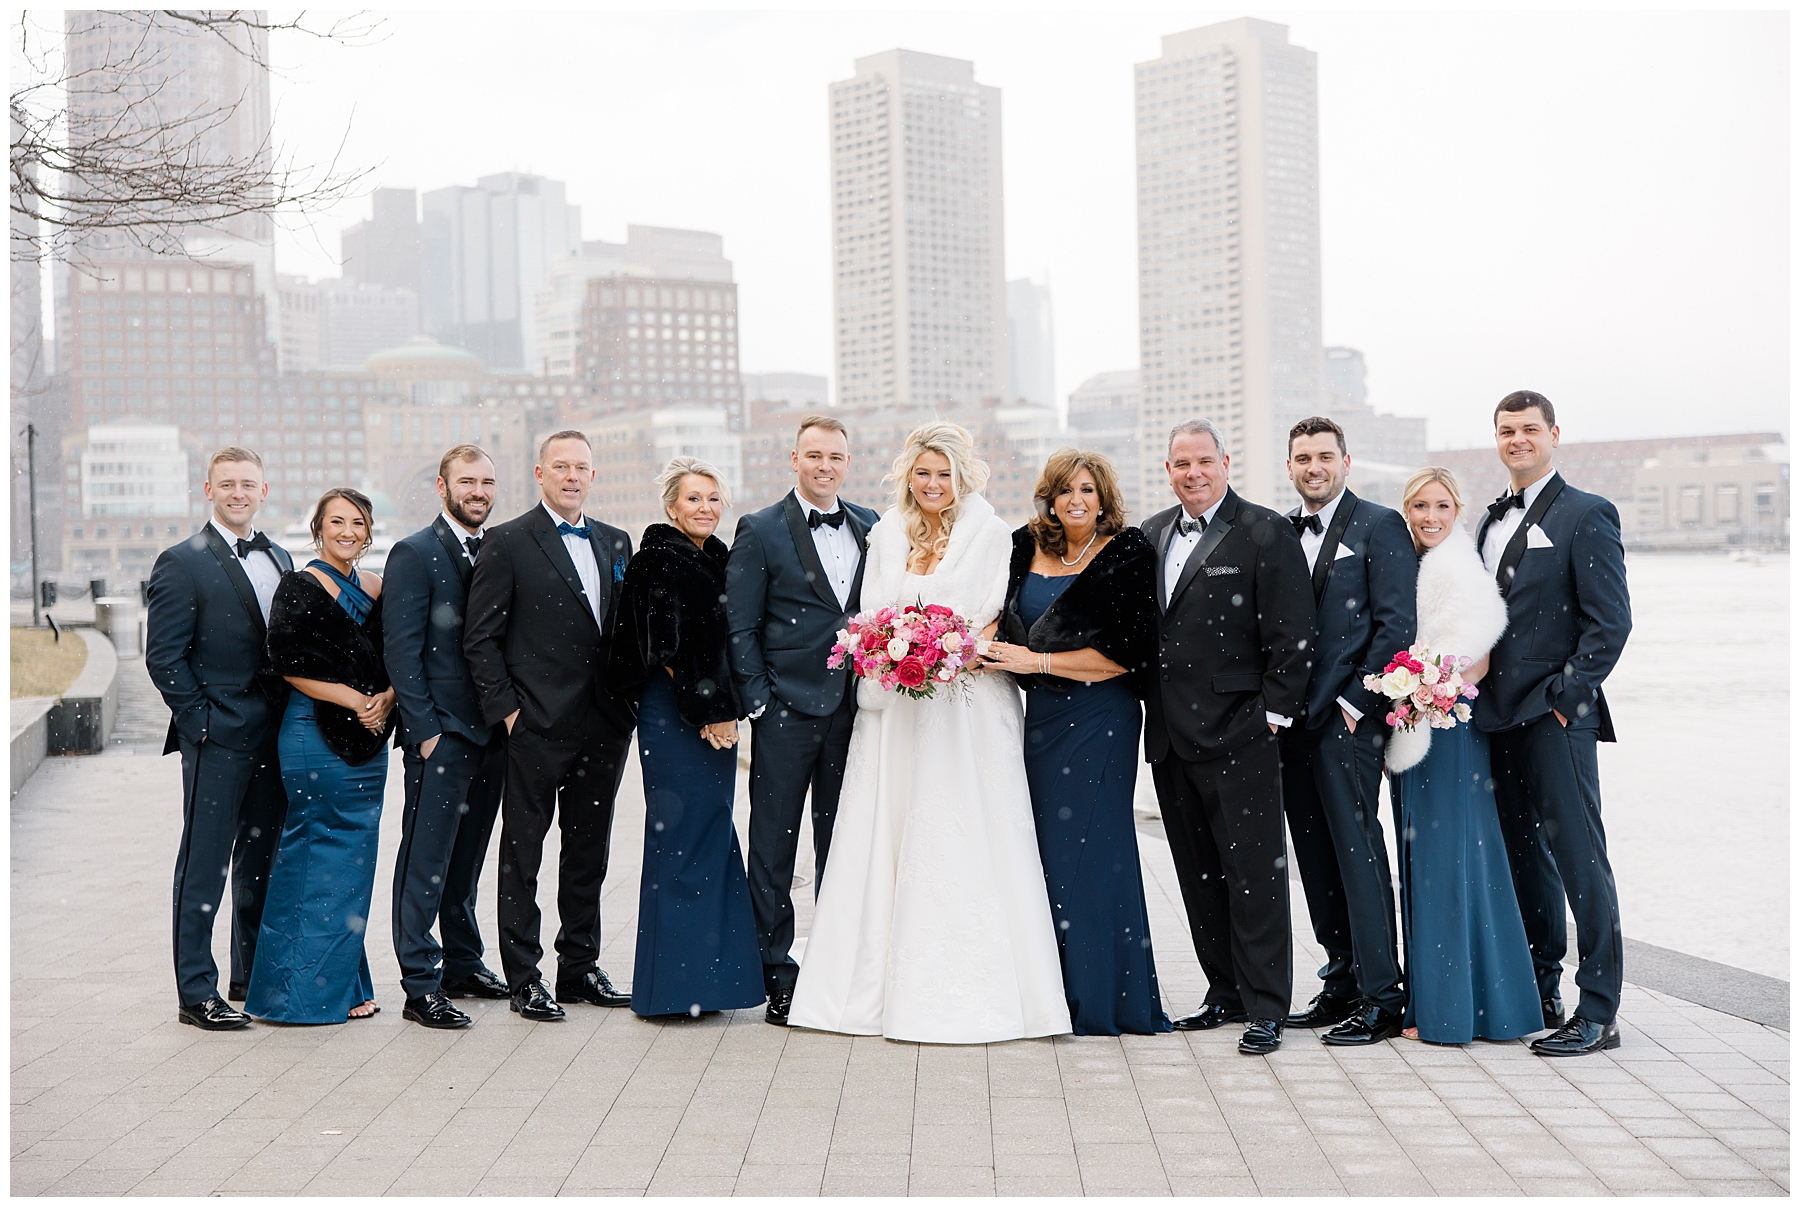 Family wedding portraits from Boston